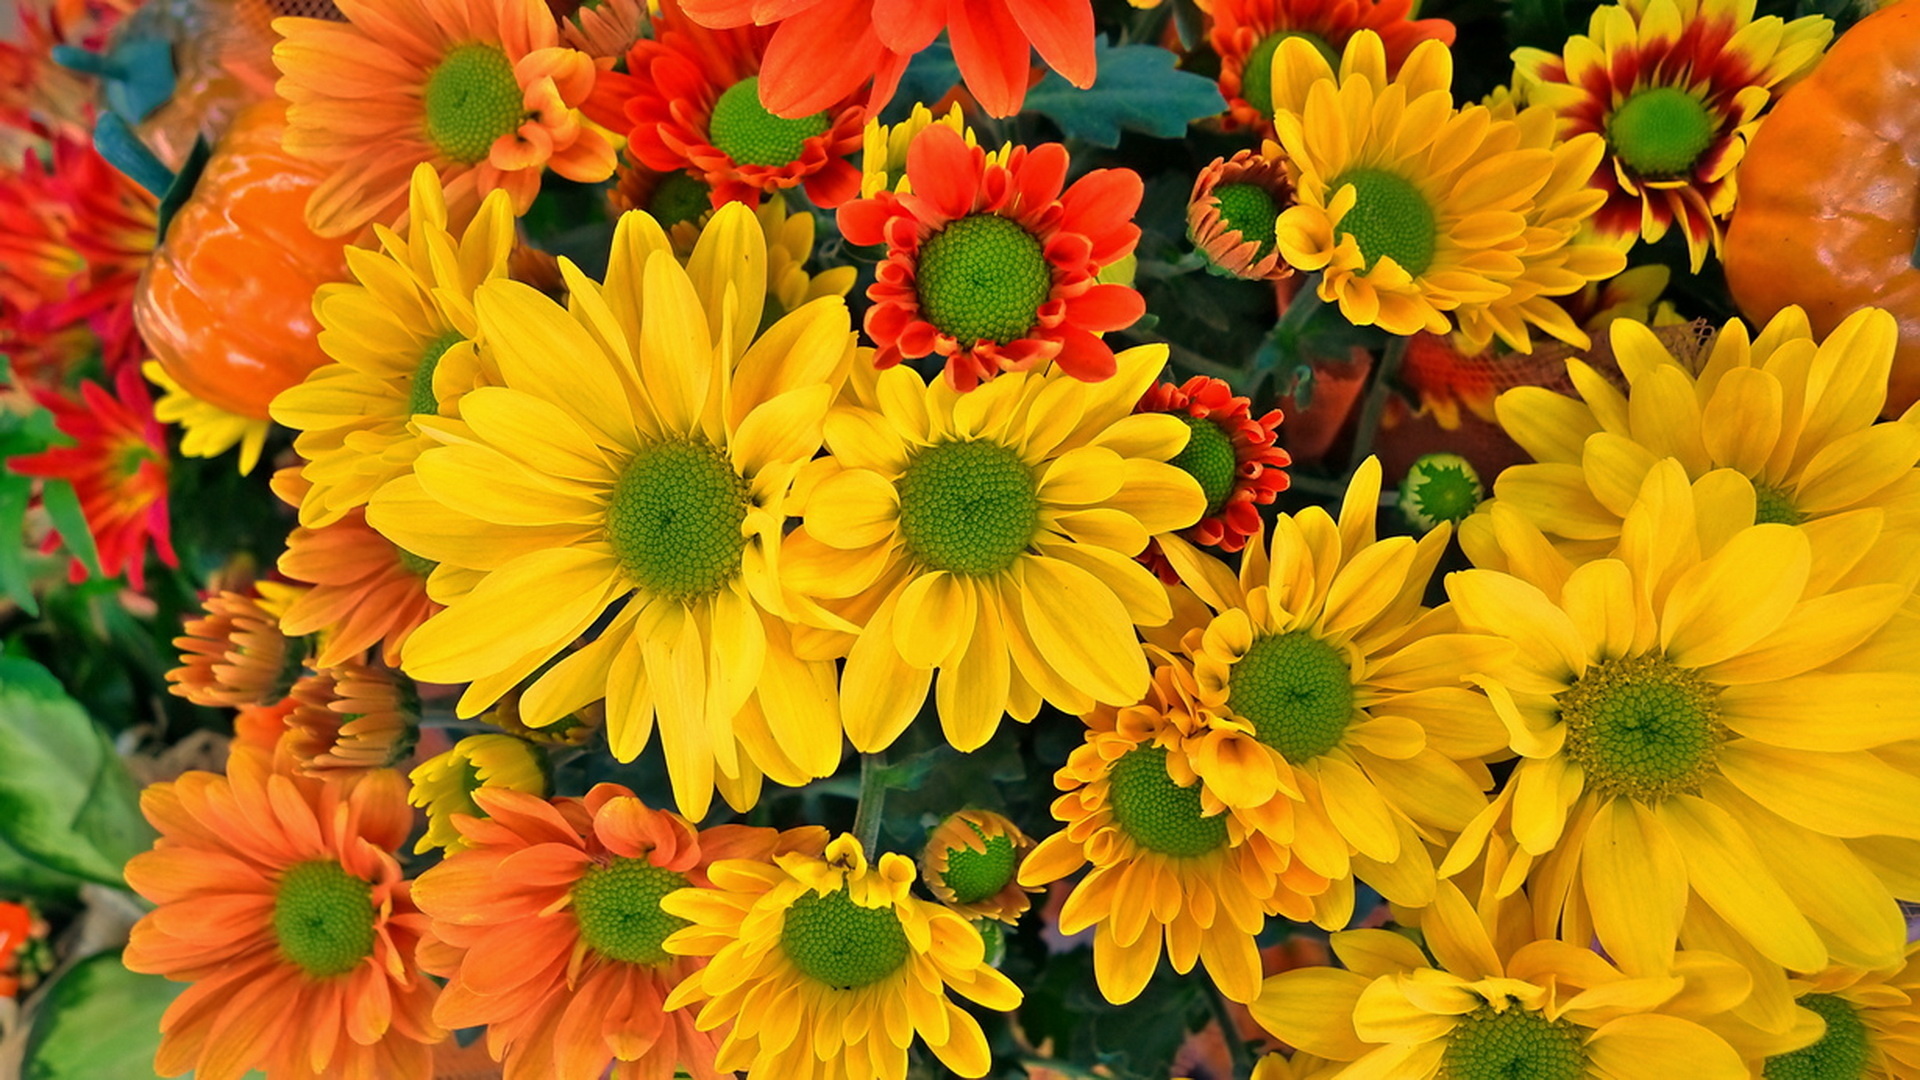 chrysanthemum, earth, flower, orange flower, yellow flower, flowers